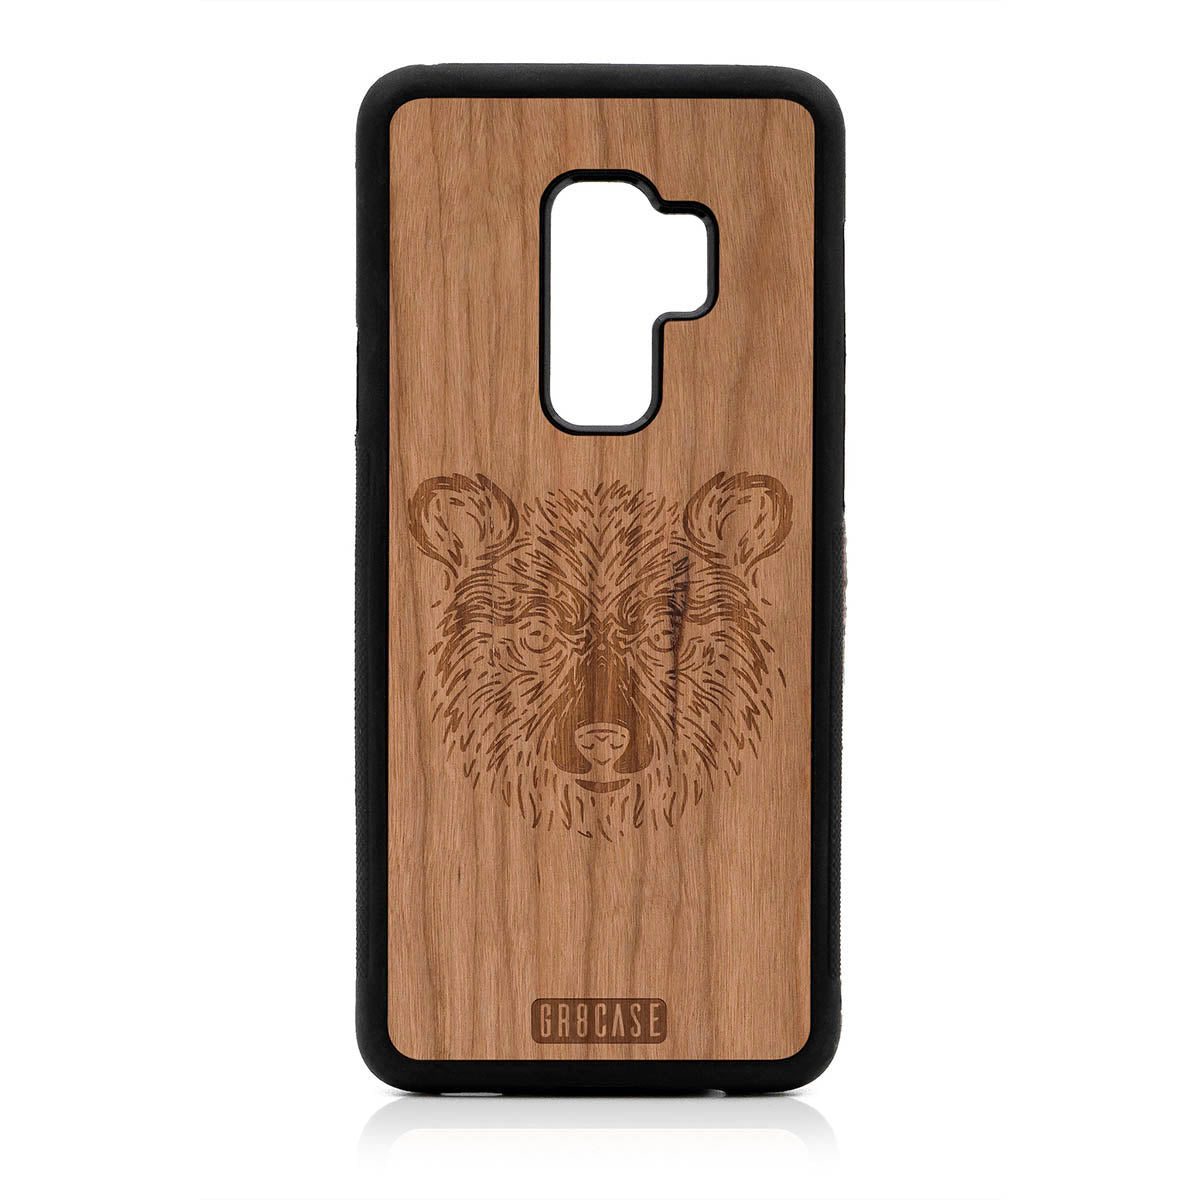 Furry Bear Design Wood Case For Samsung Galaxy S9 Plus